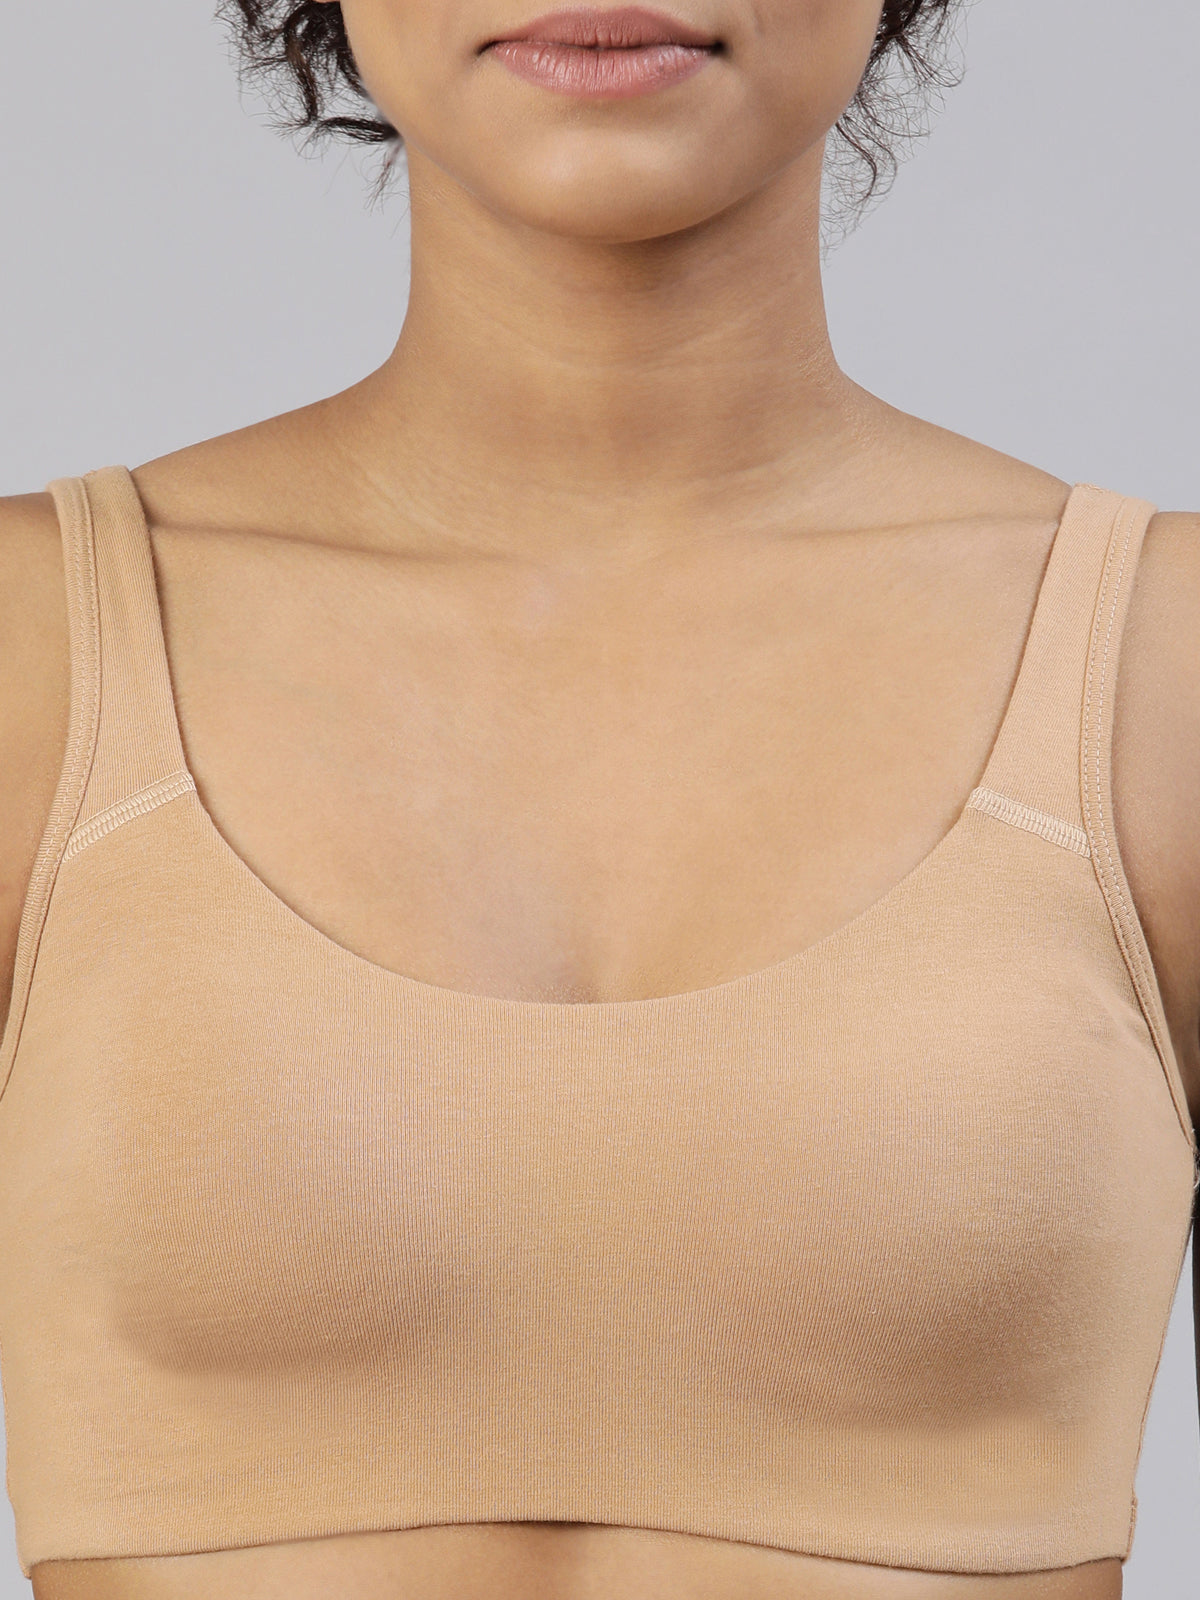 blossom-aesthetic bra-skin2-anti microbial treated fabric-everyday bra